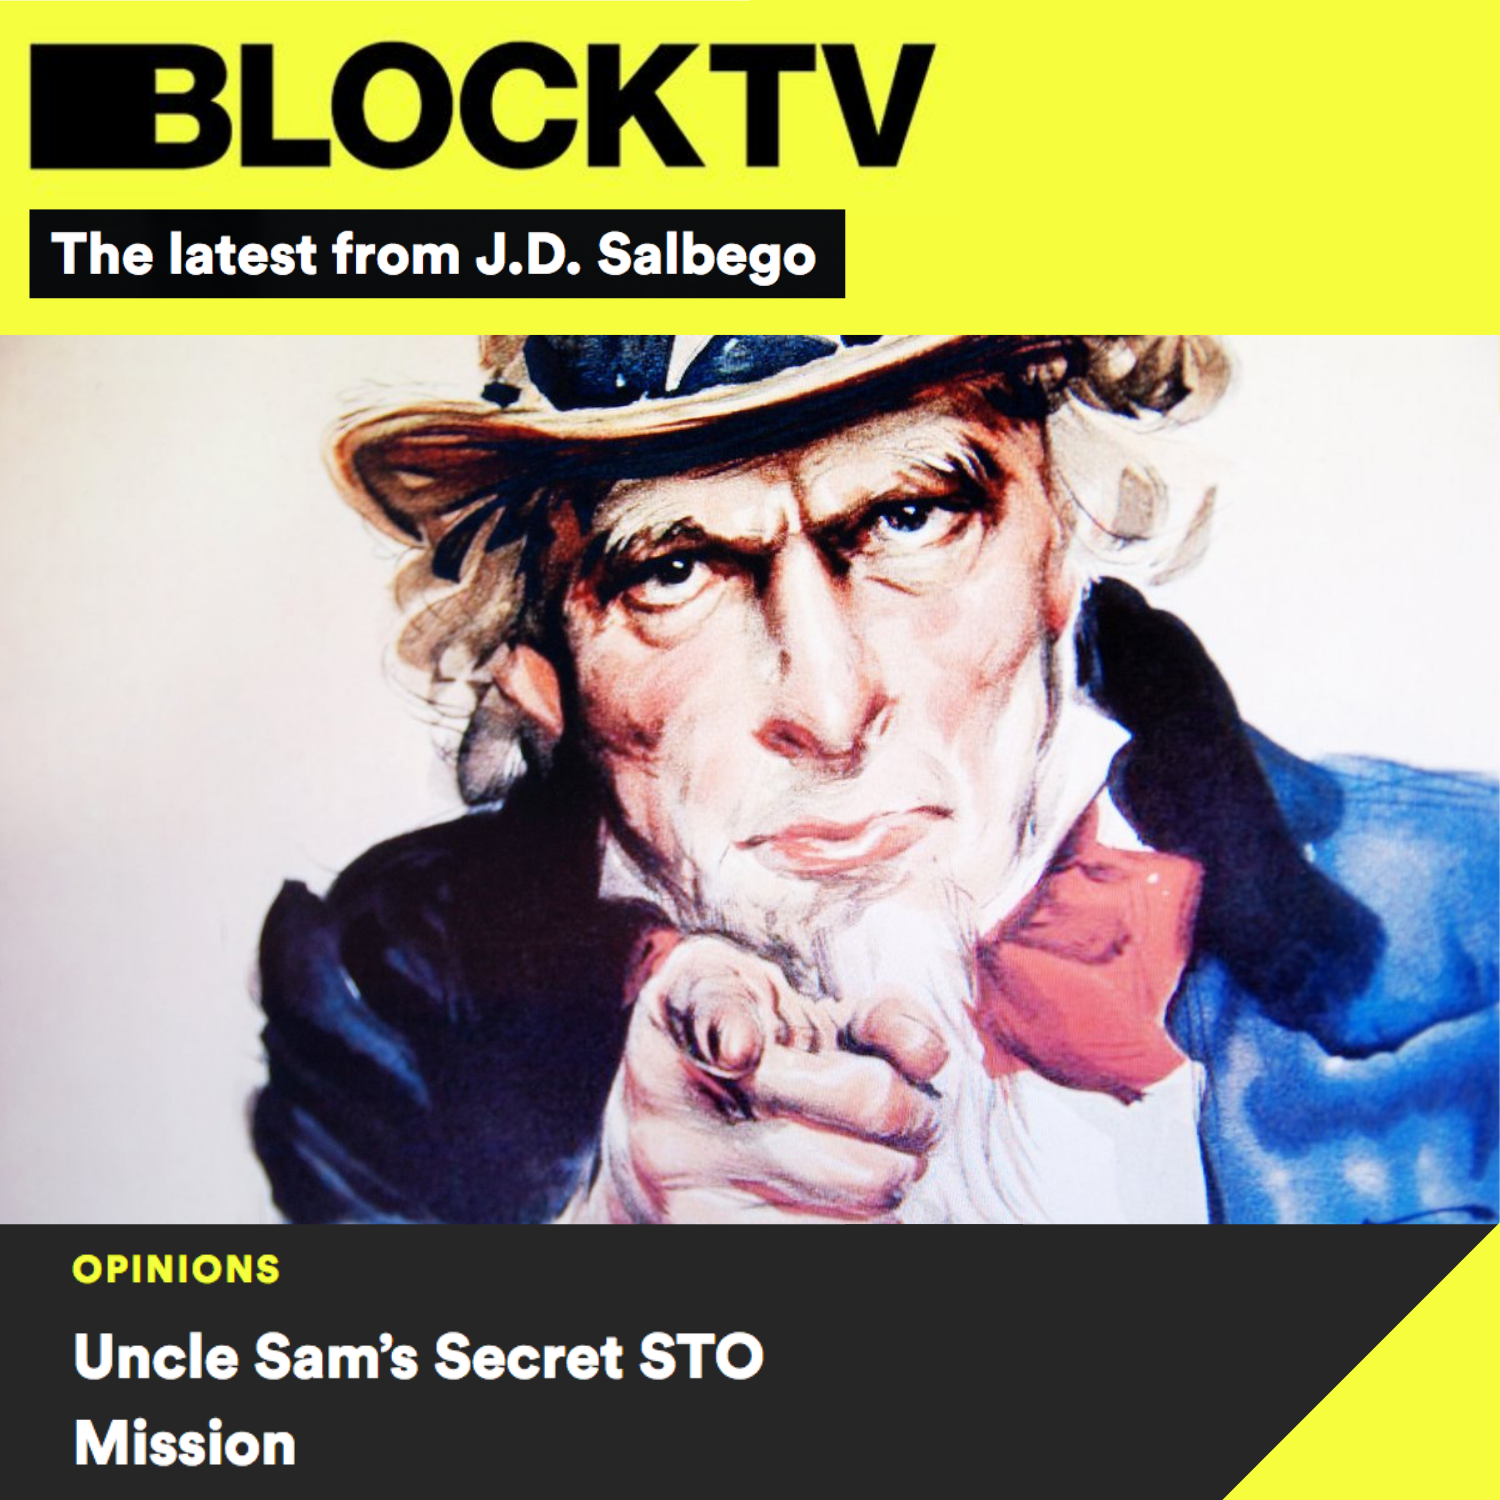 Uncle Sam’s Secret STO Mission